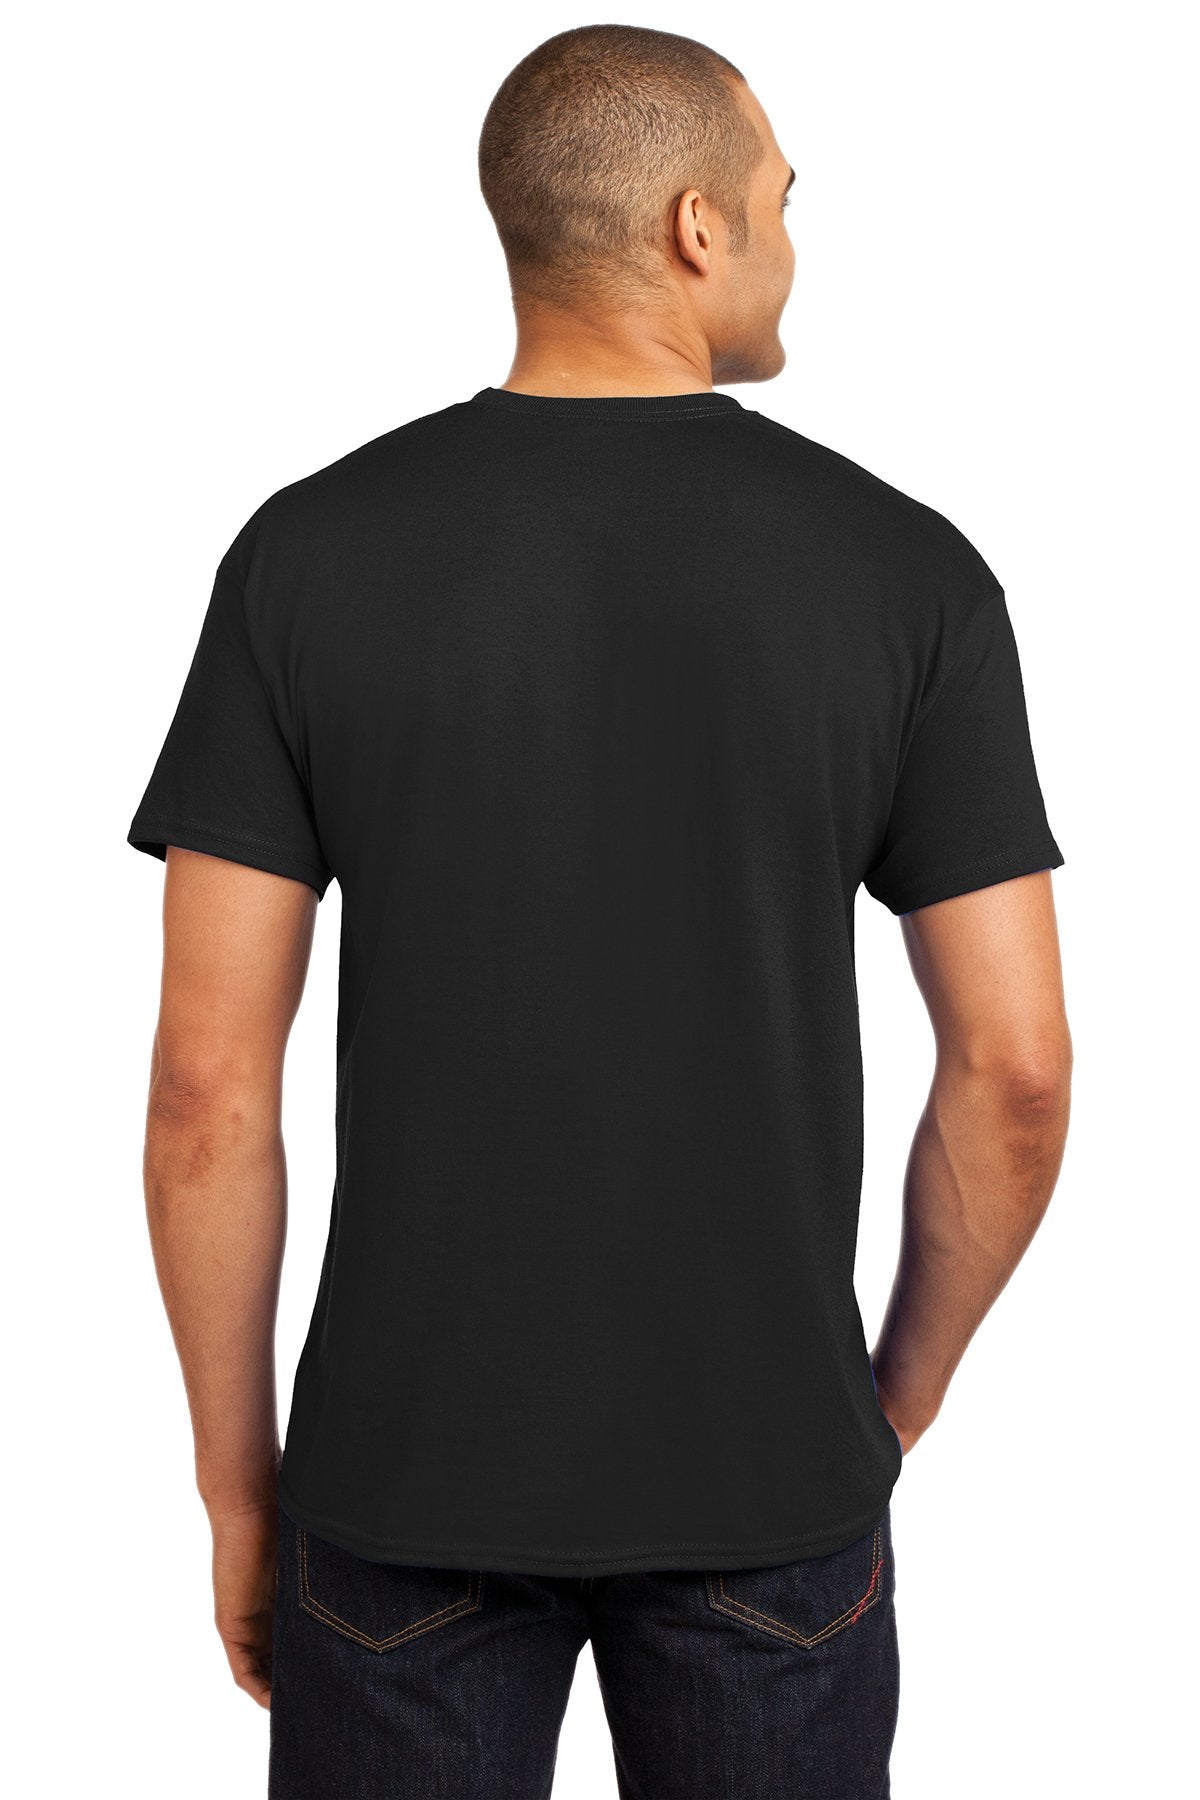 hanes ecosmart 50 50 cotton/poly t shirt 5170 black